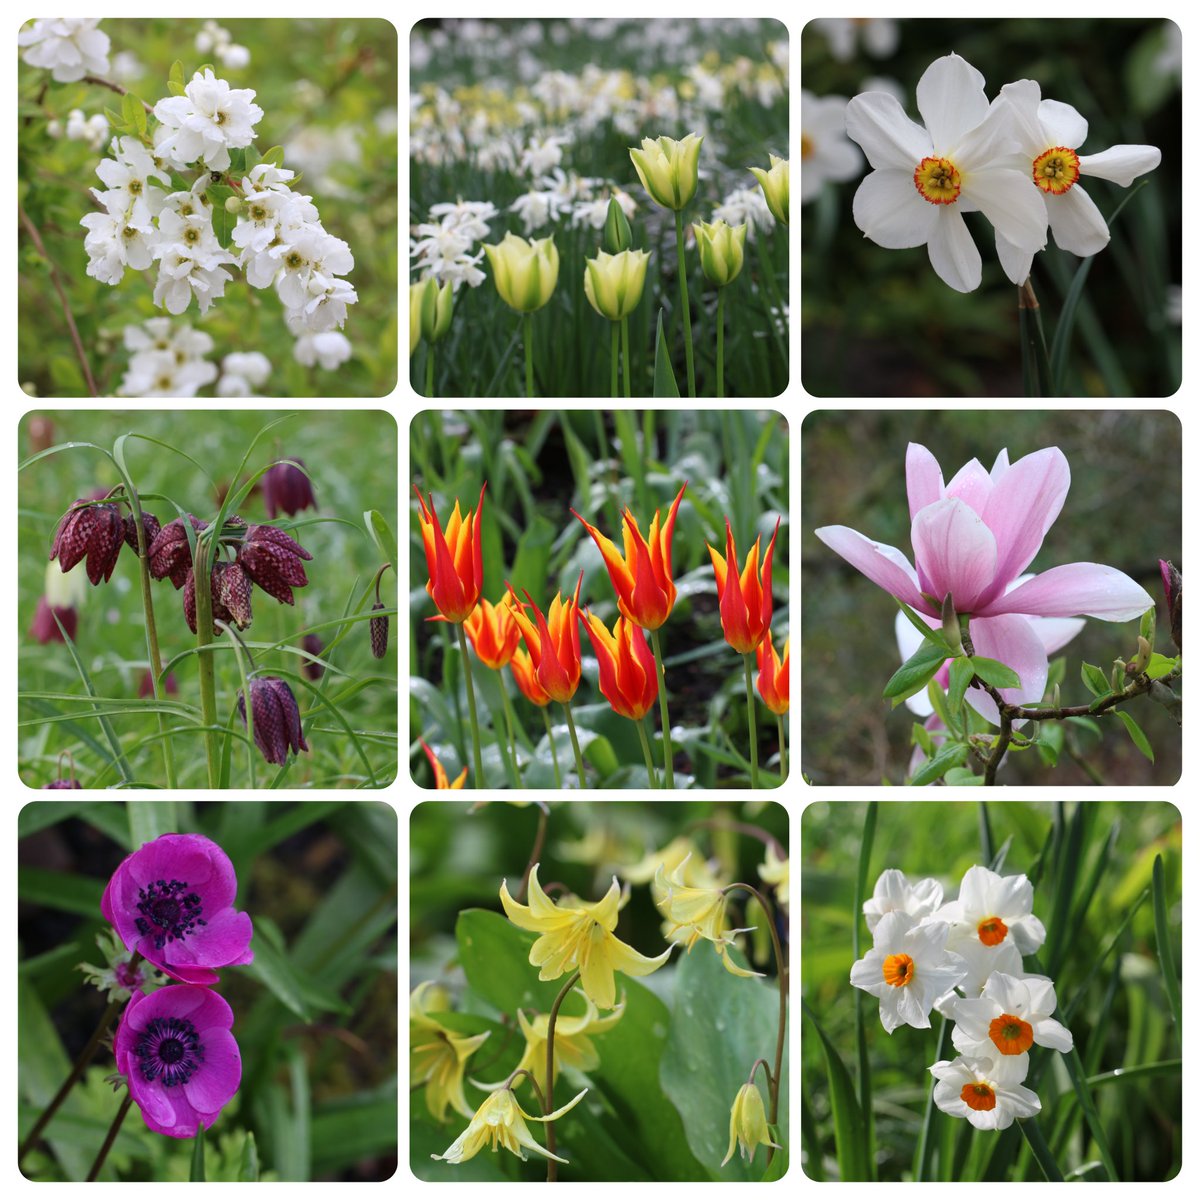 Early April at #DunhamMassey 
So hard to pick a favourite spring flower #GardeningX #thursdayvibes 🌱🌸🪻🌷🌼🌿